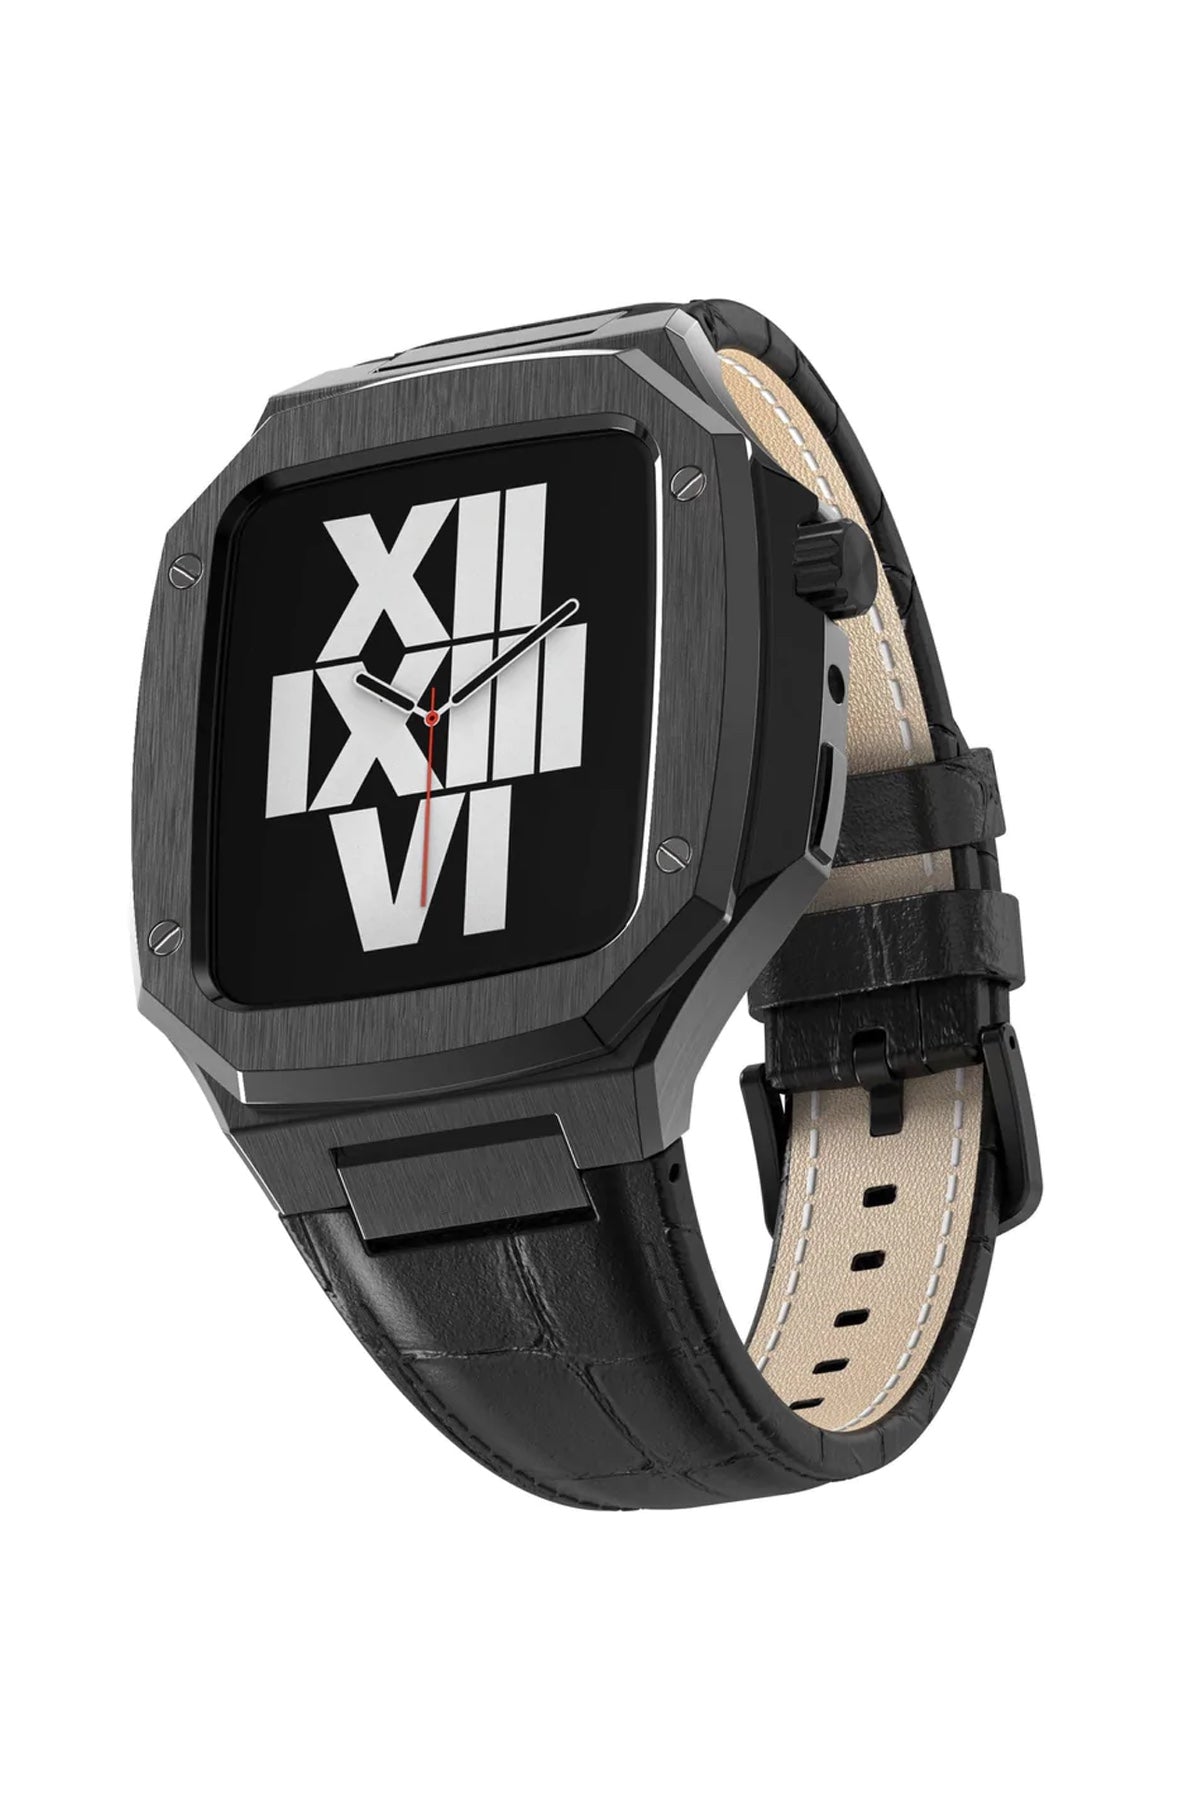 Apple Watch Compatible Belize Black Case Protective Leather Band Black 